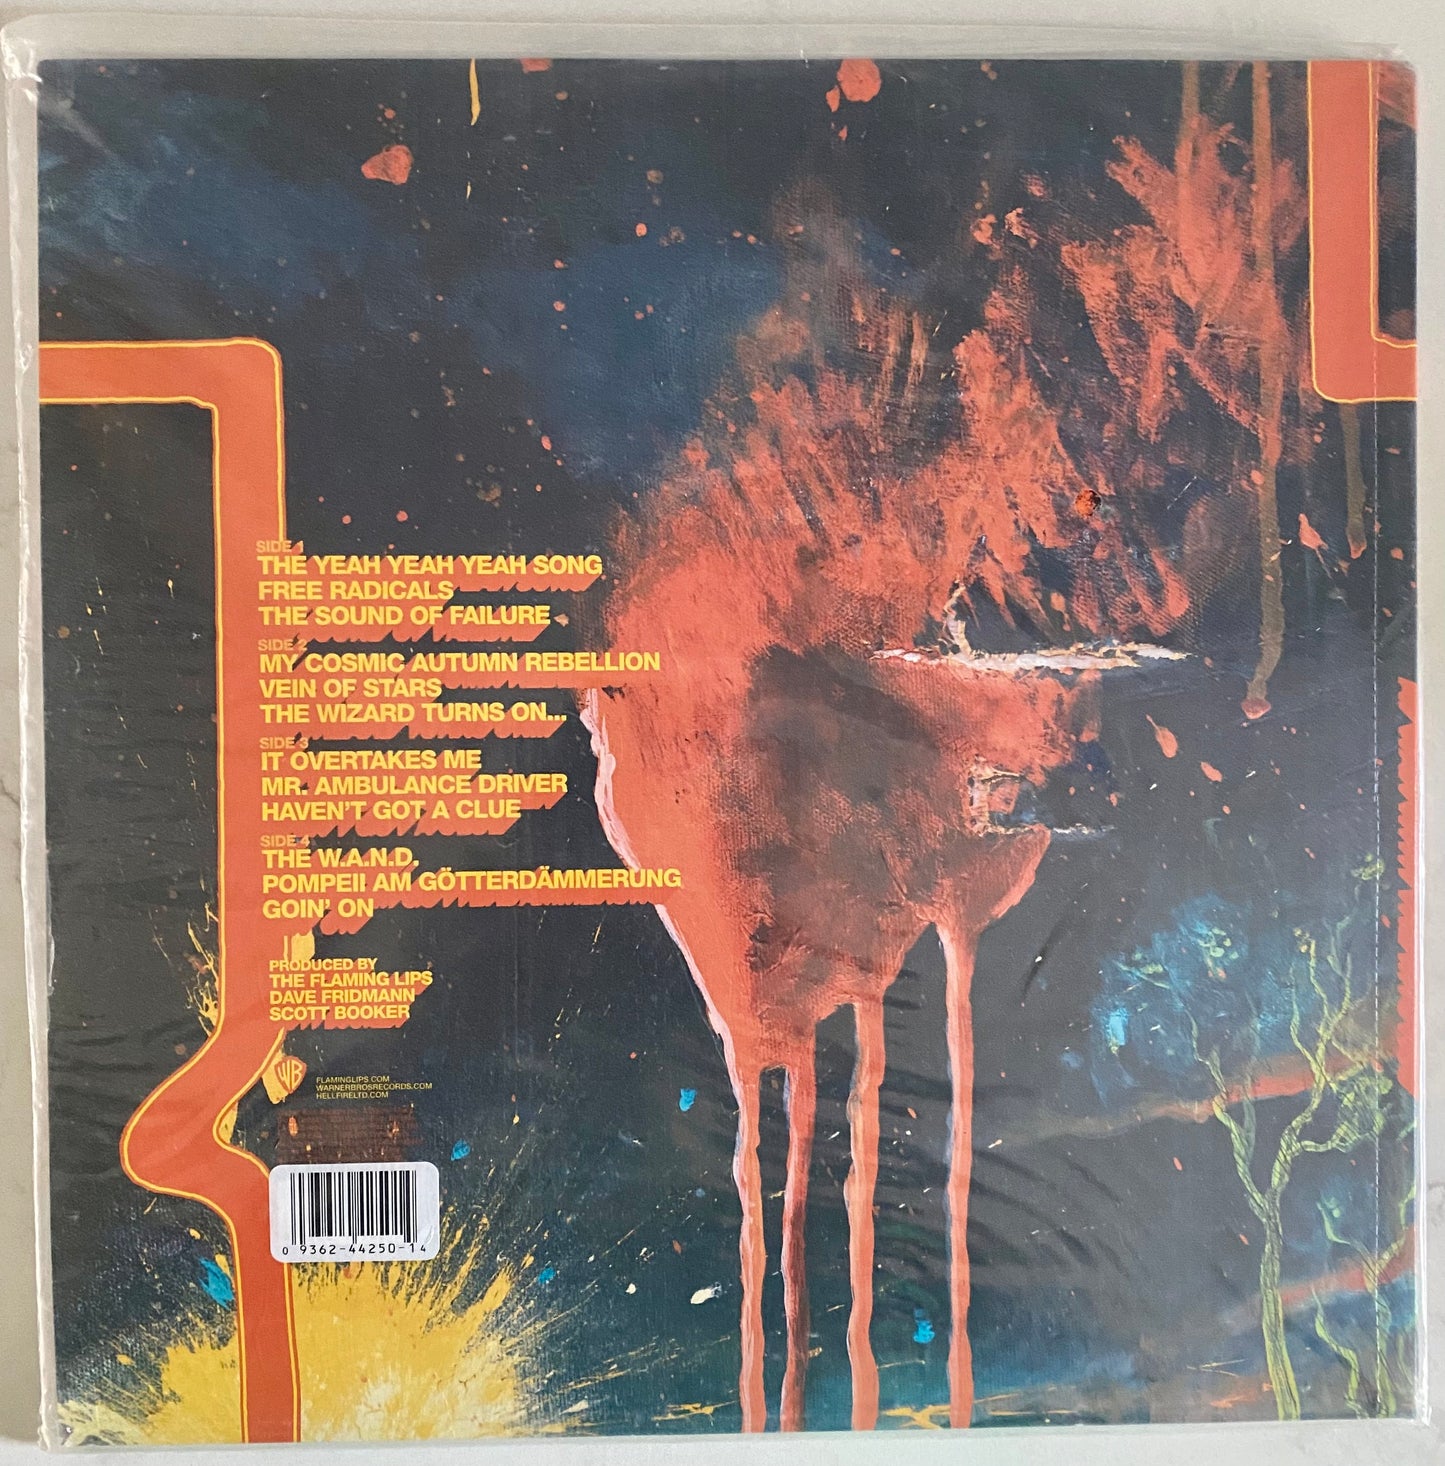 The Flaming Lips - At War With The Mystics (2xLP, Album, Ltd, 180). SEALED!! ROCK